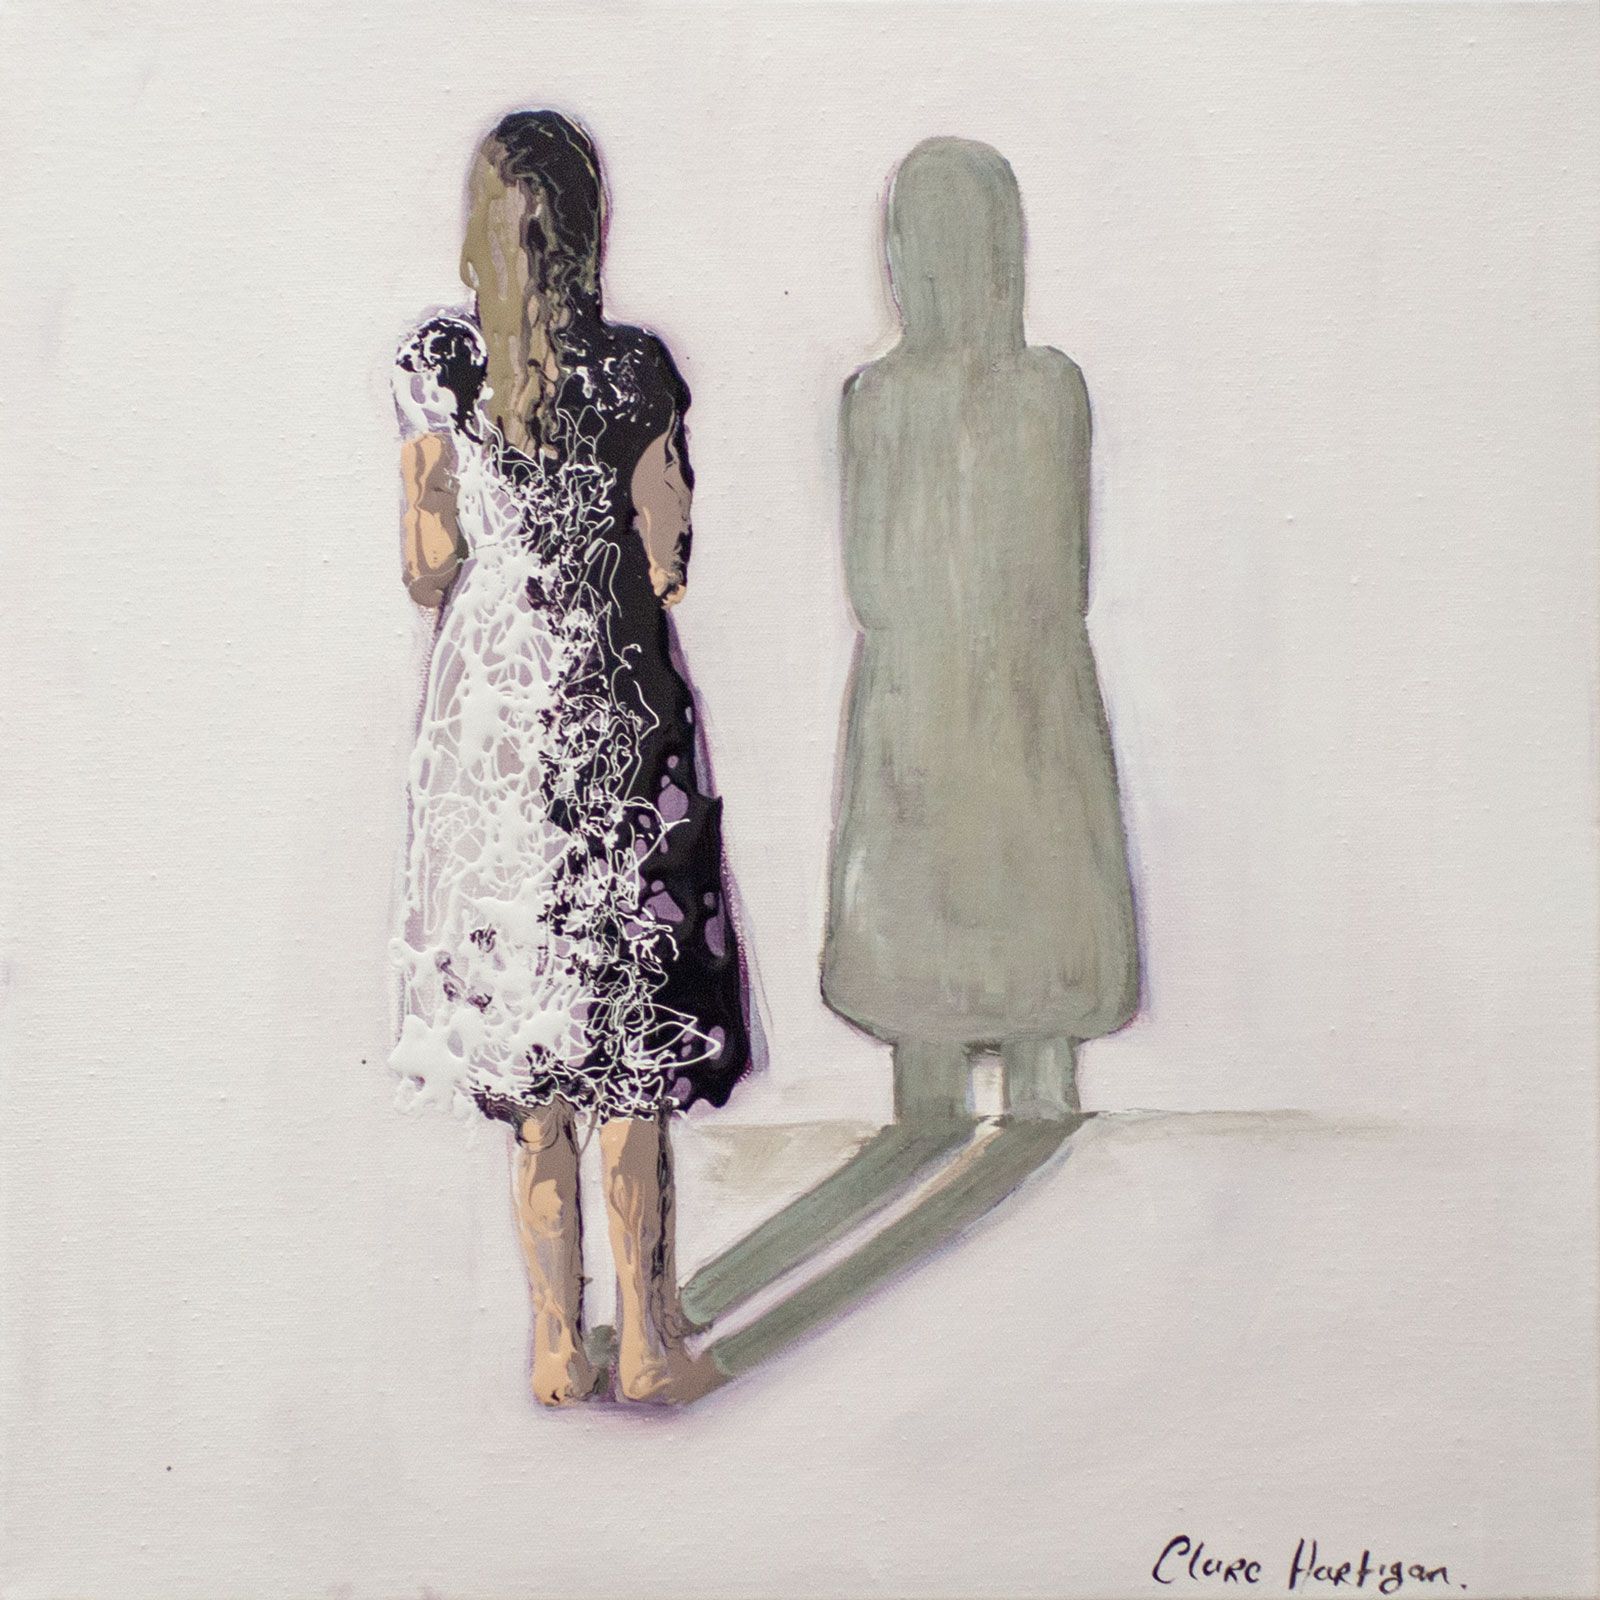 Talking To My Shadow by Clare Hartigan